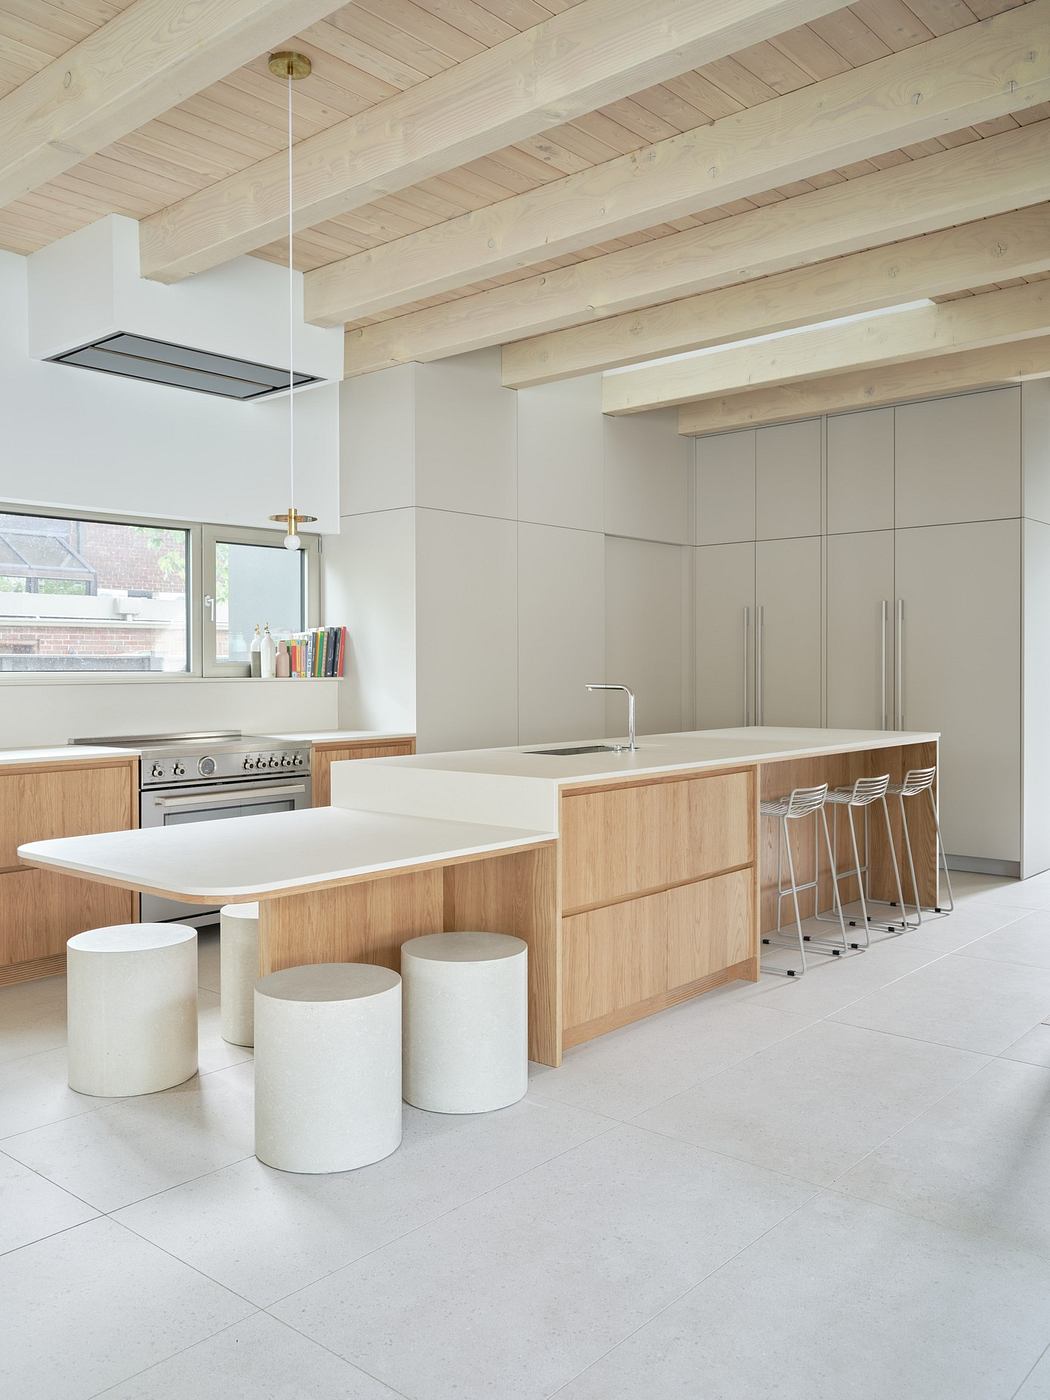 Modern kitchen interior with wooden features and minimalist design.